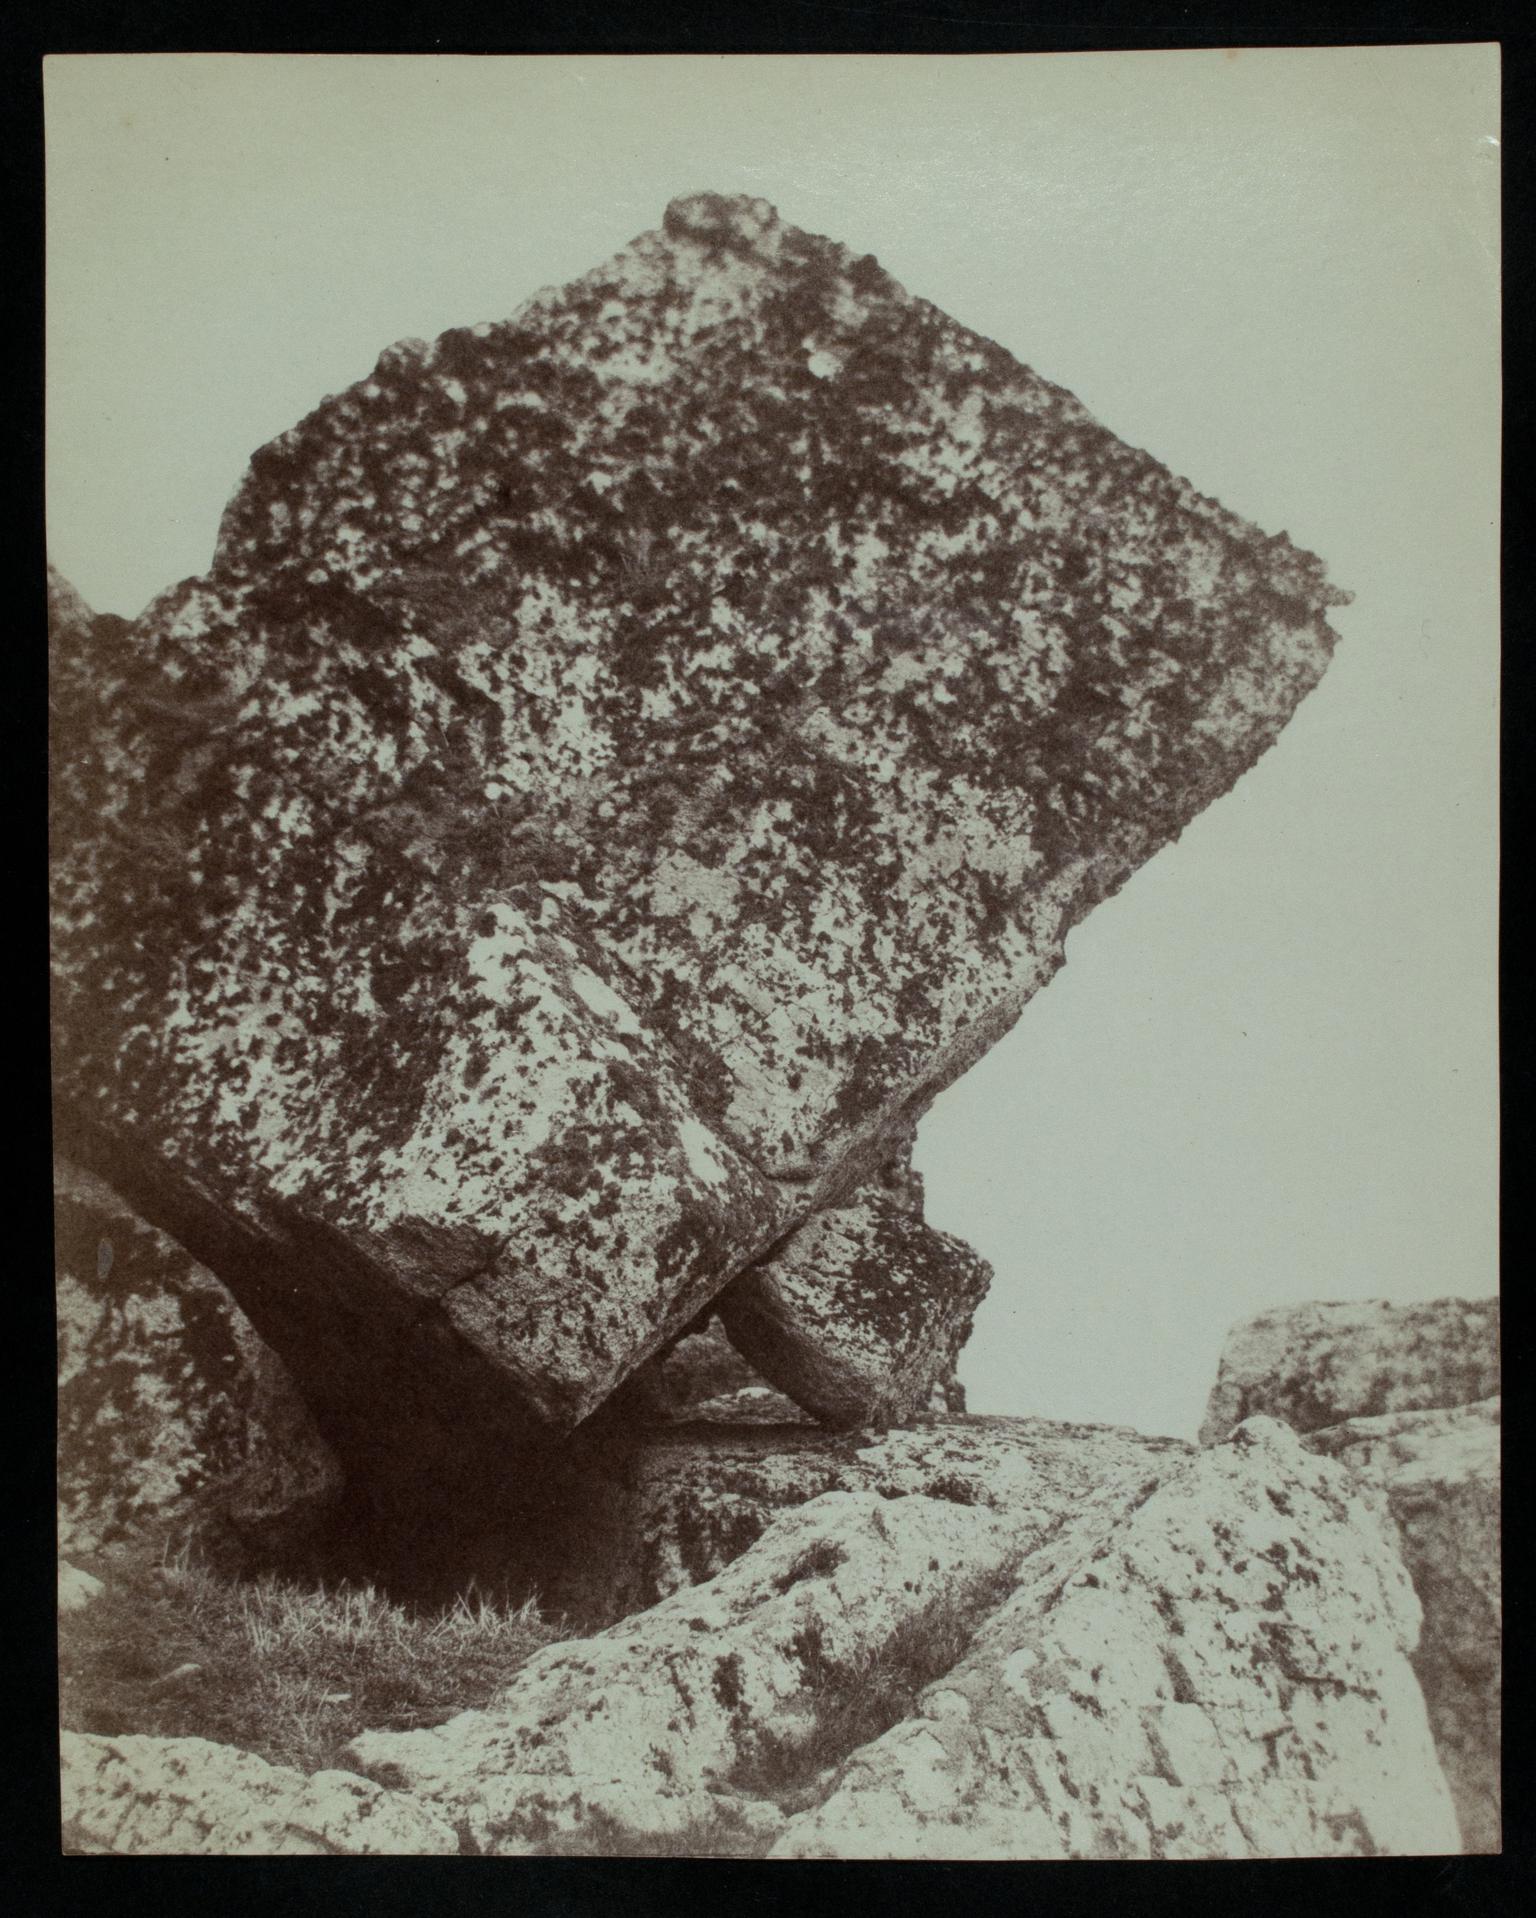 Rocks, photograph